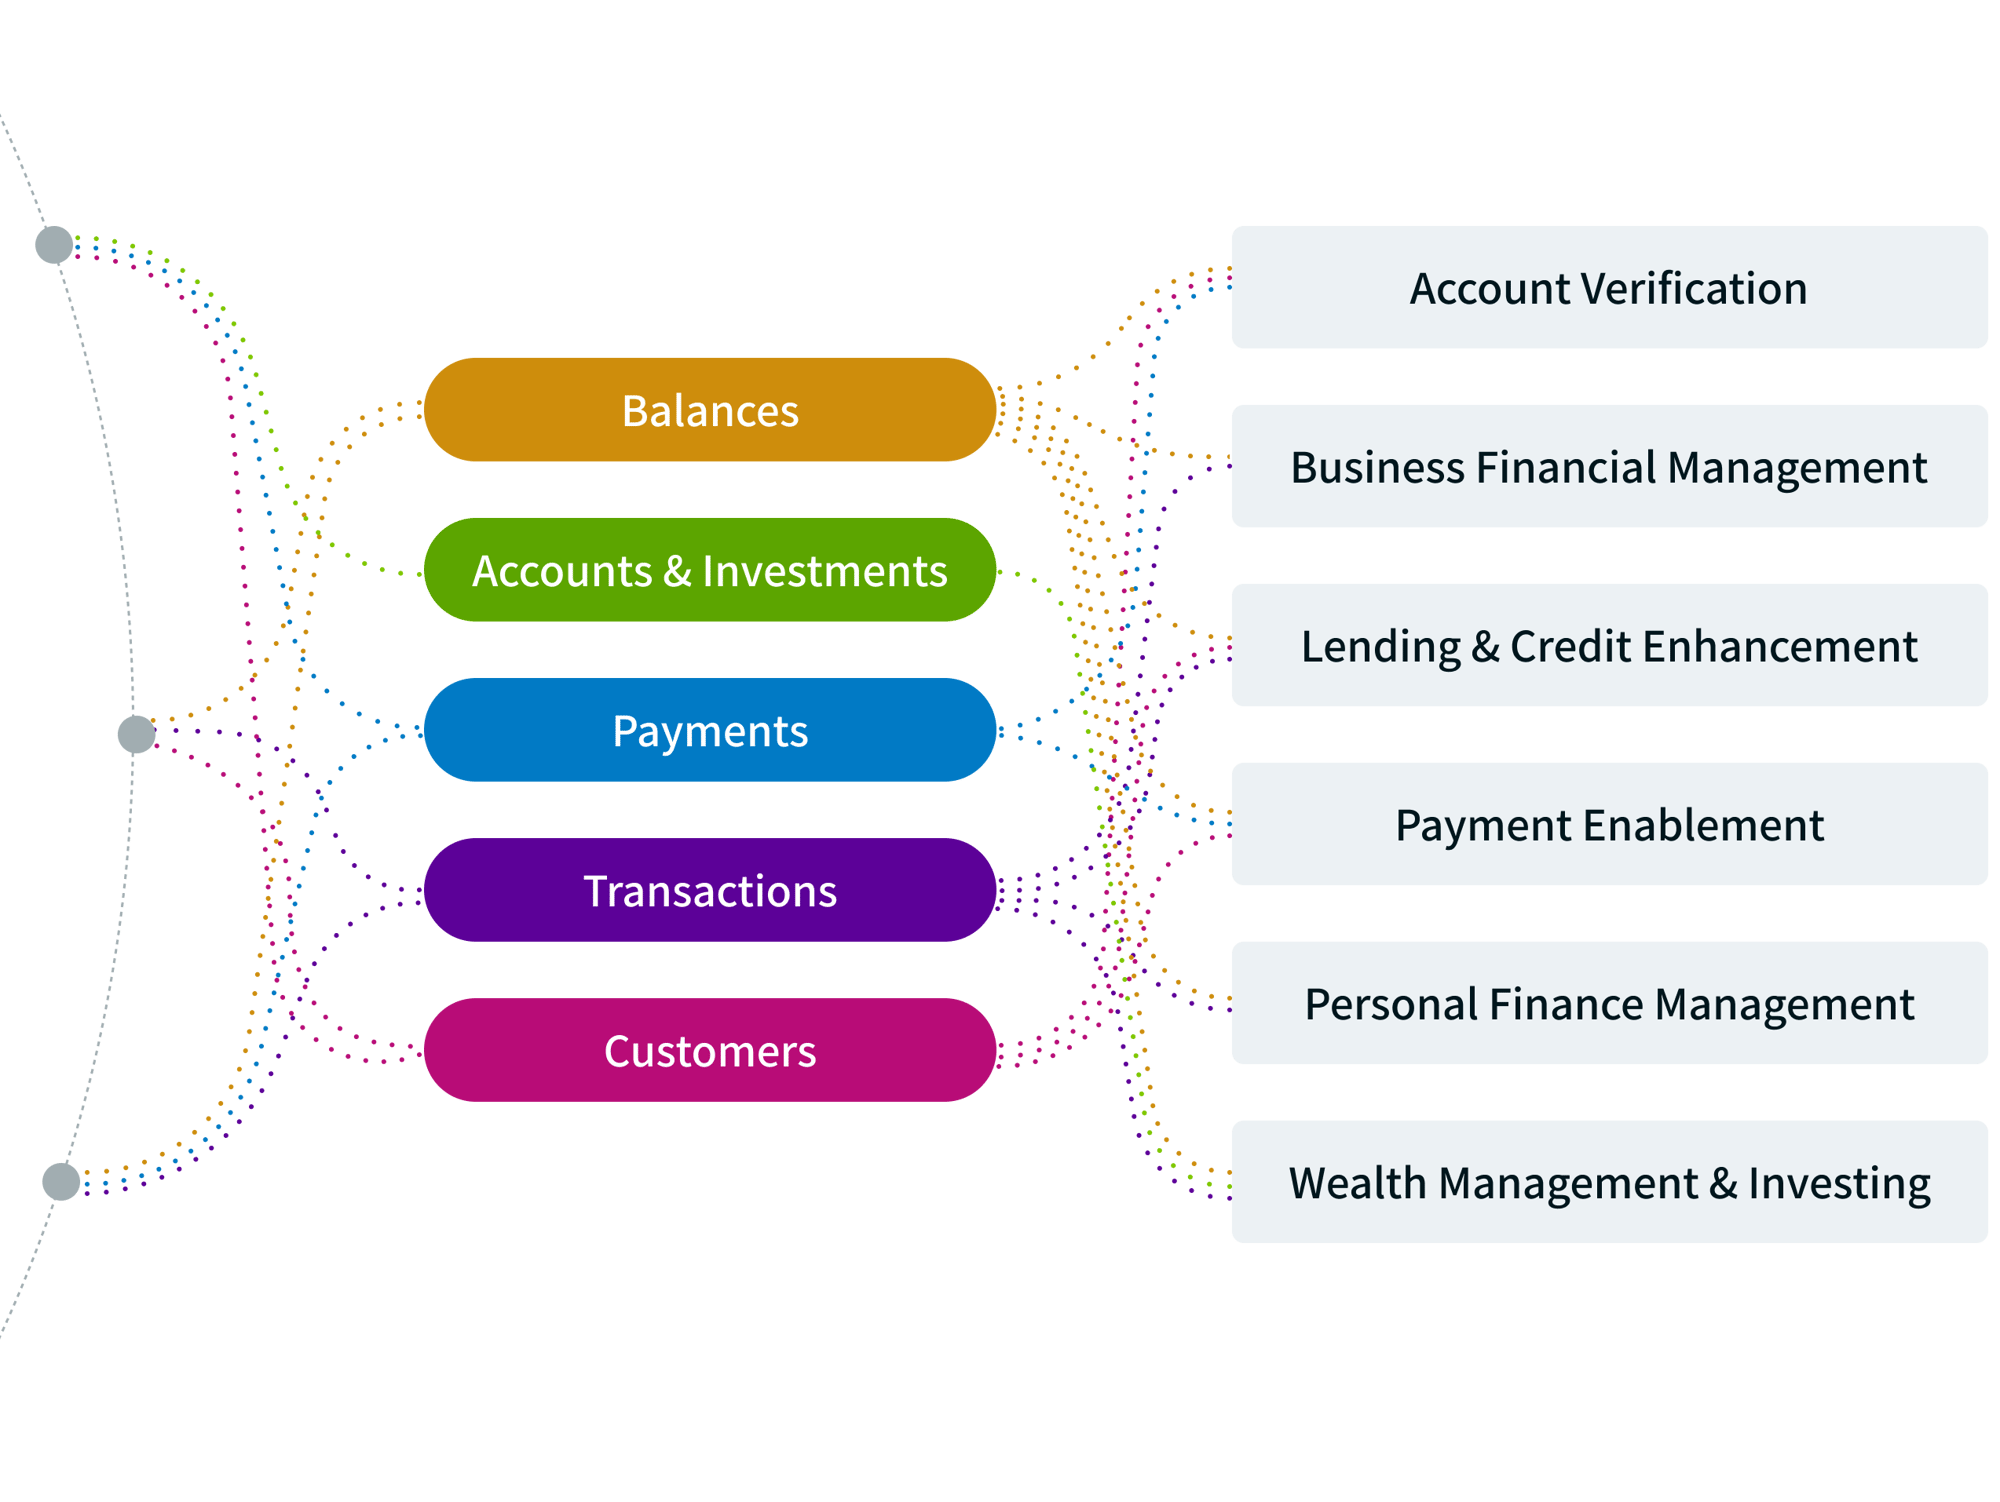 AccountVerification graphic